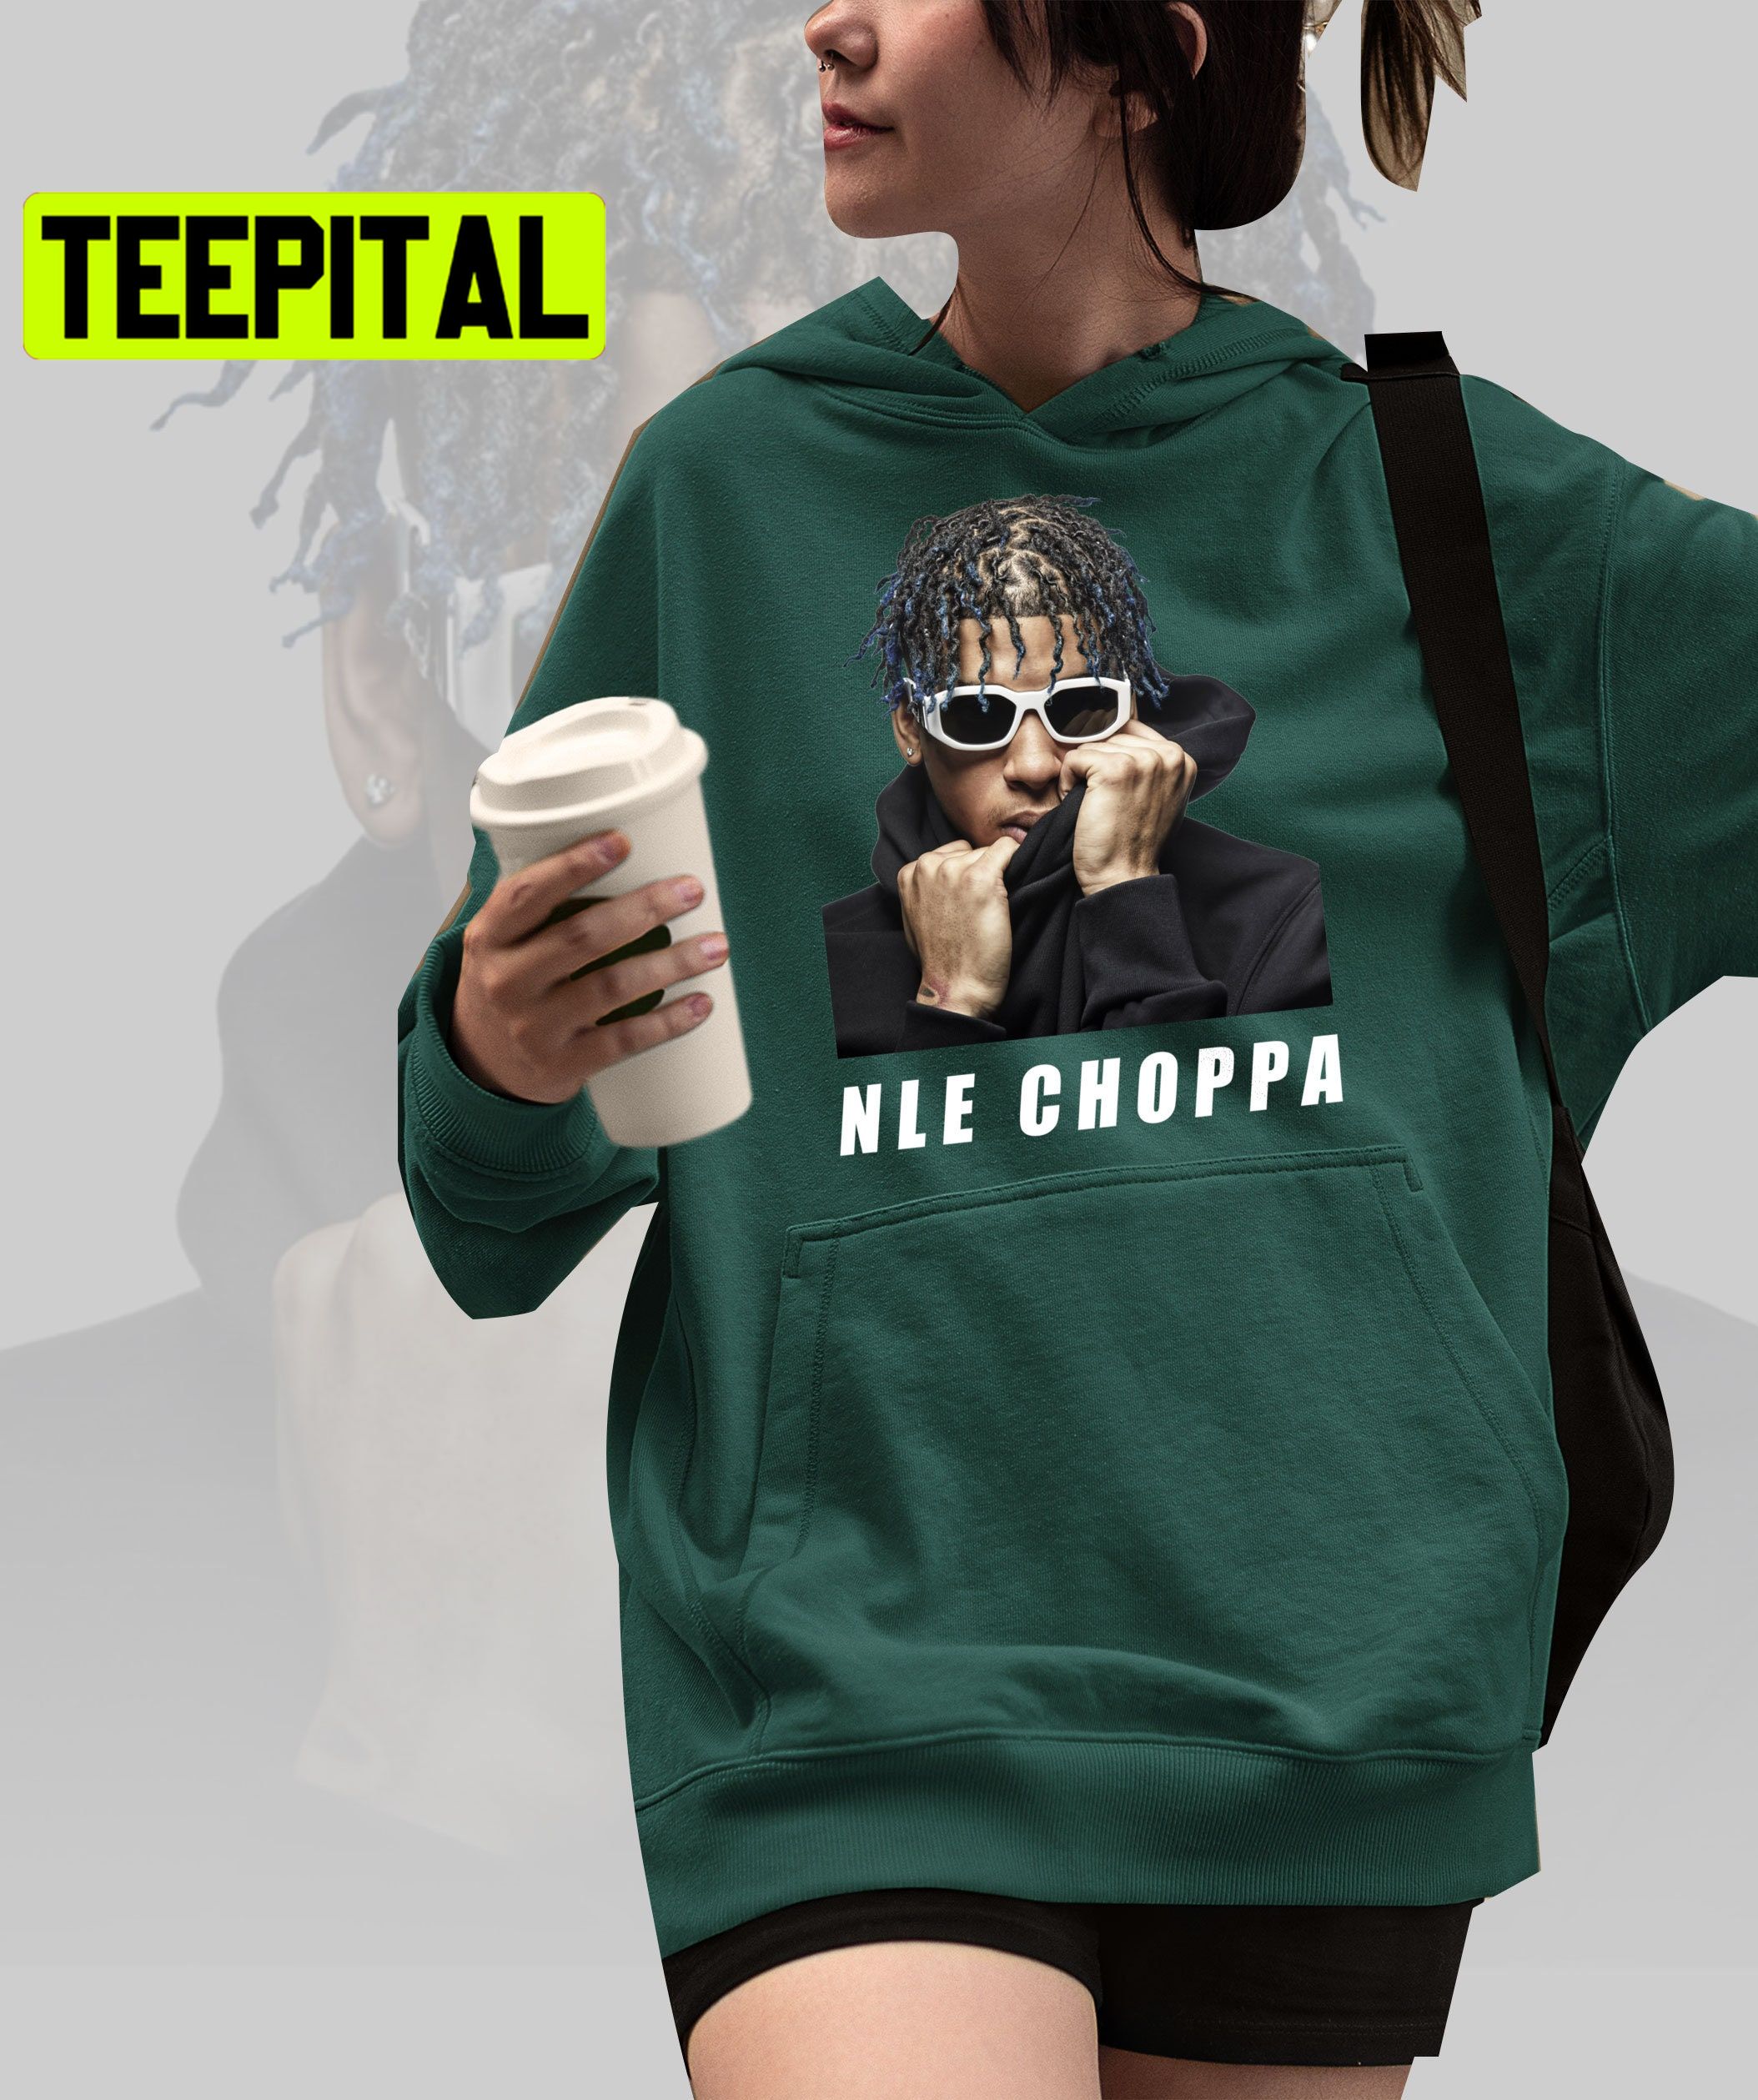 Nle Choppa Rap Hip HopTrending Unisex Shirt